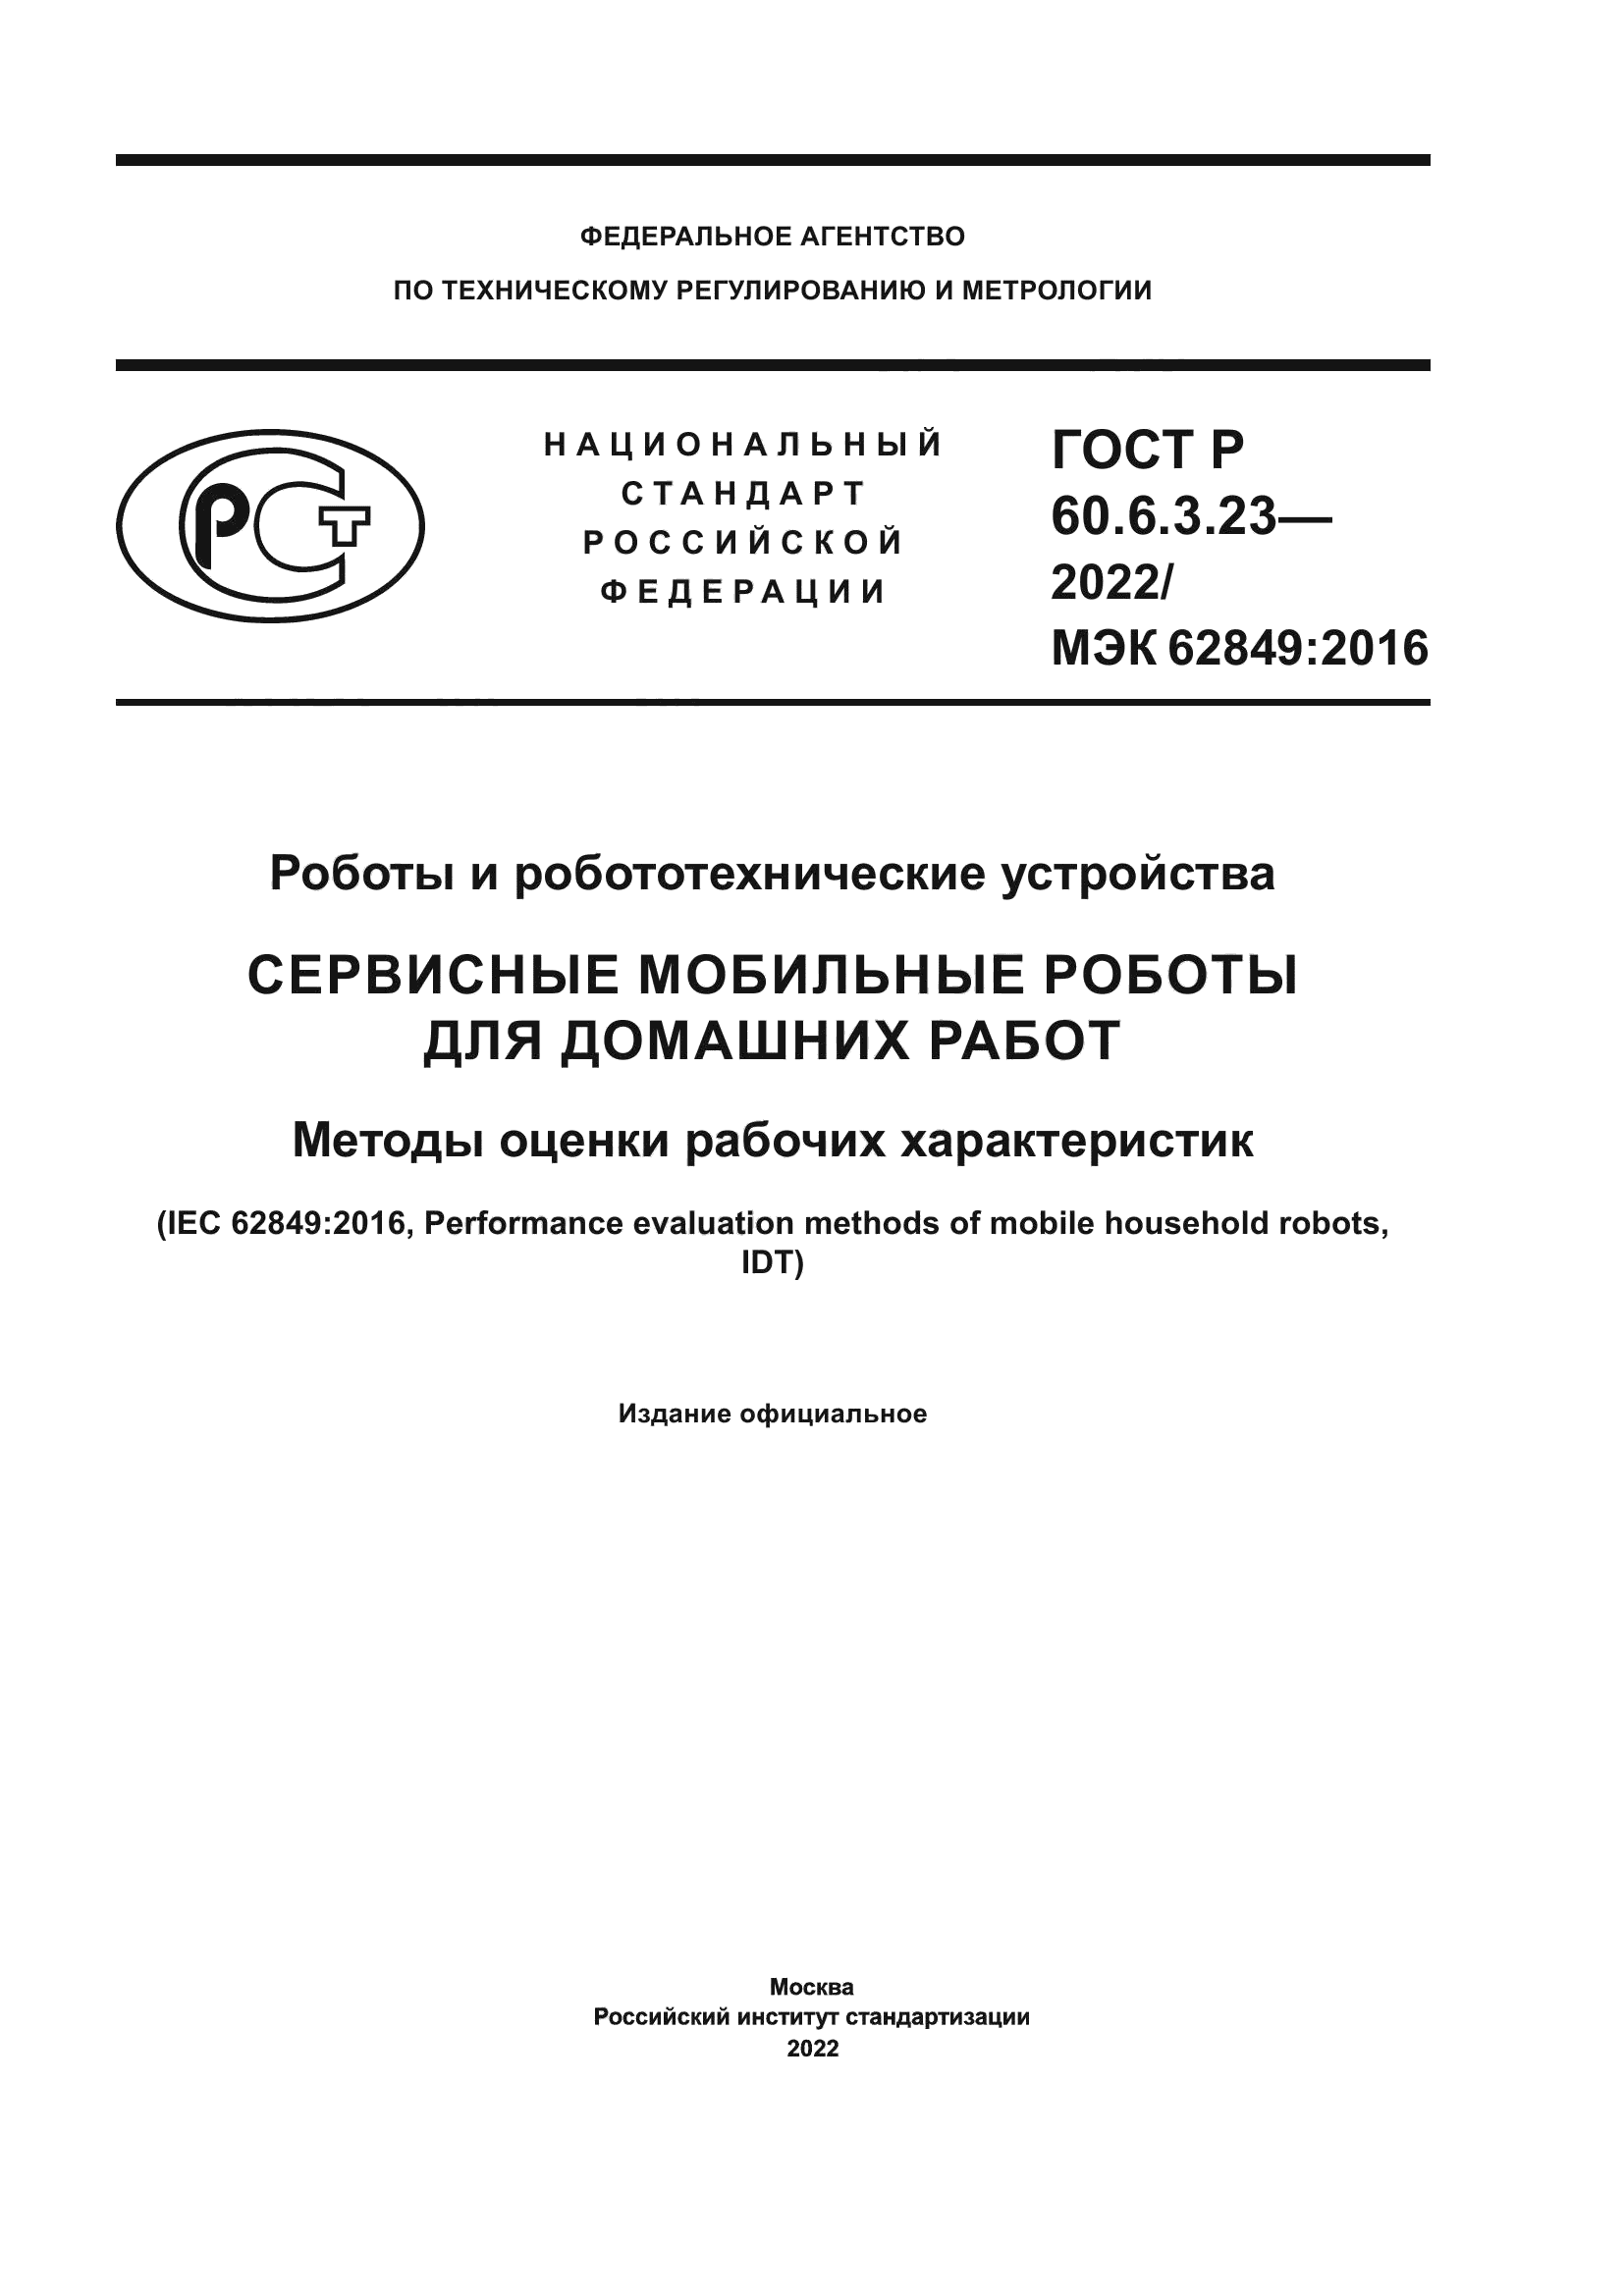 ГОСТ Р 60.6.3.23-2022